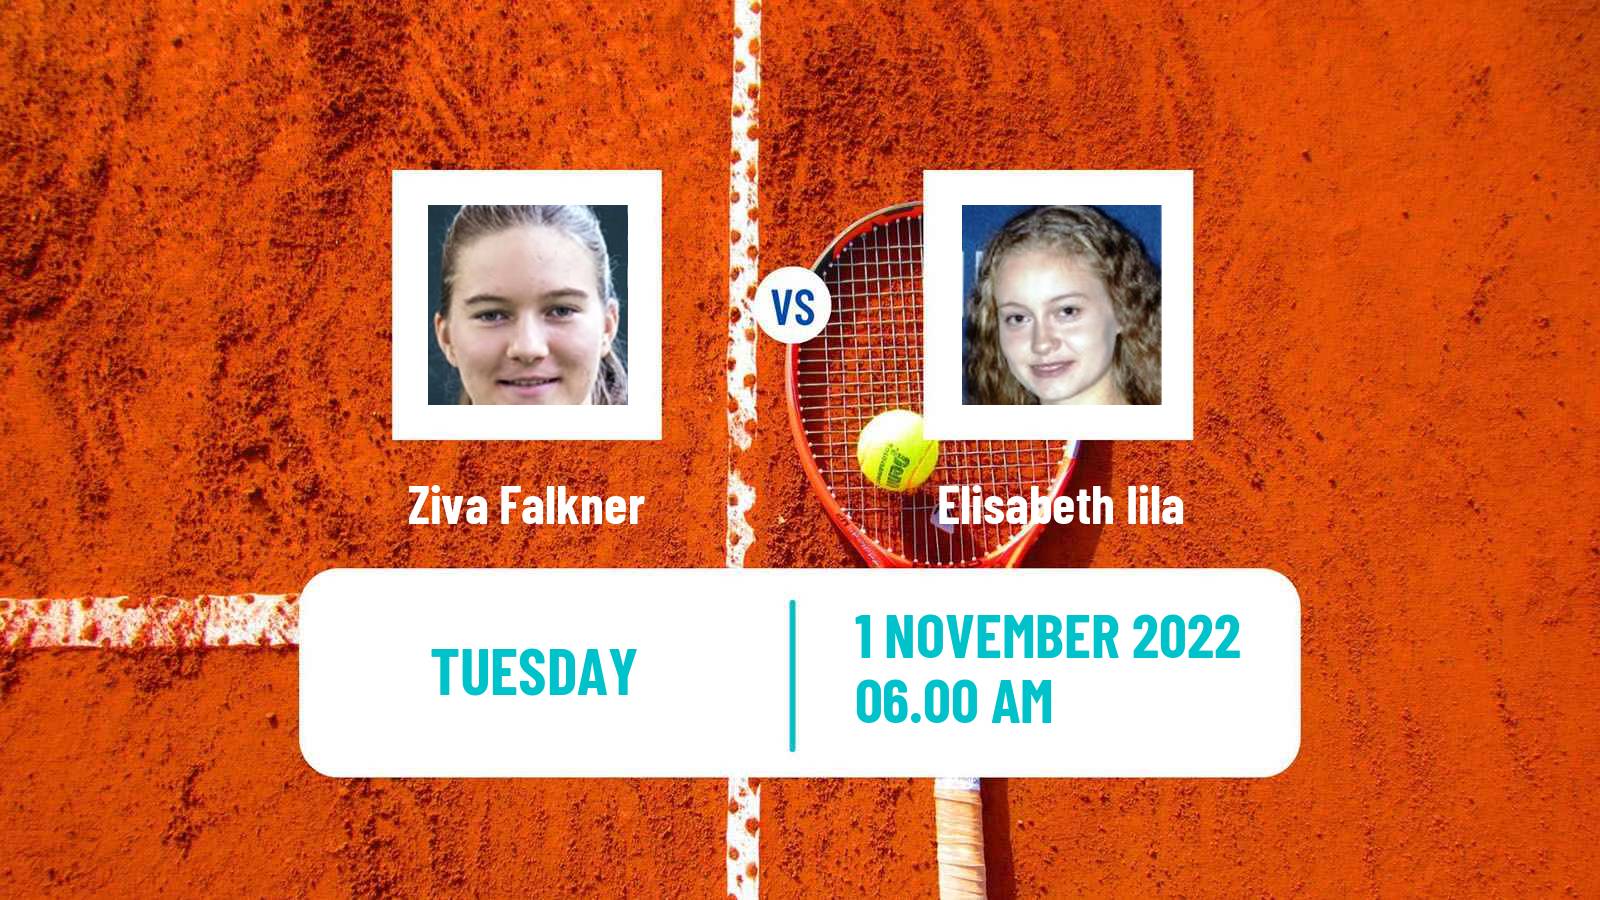 Tennis ITF Tournaments Ziva Falkner - Elisabeth Iila